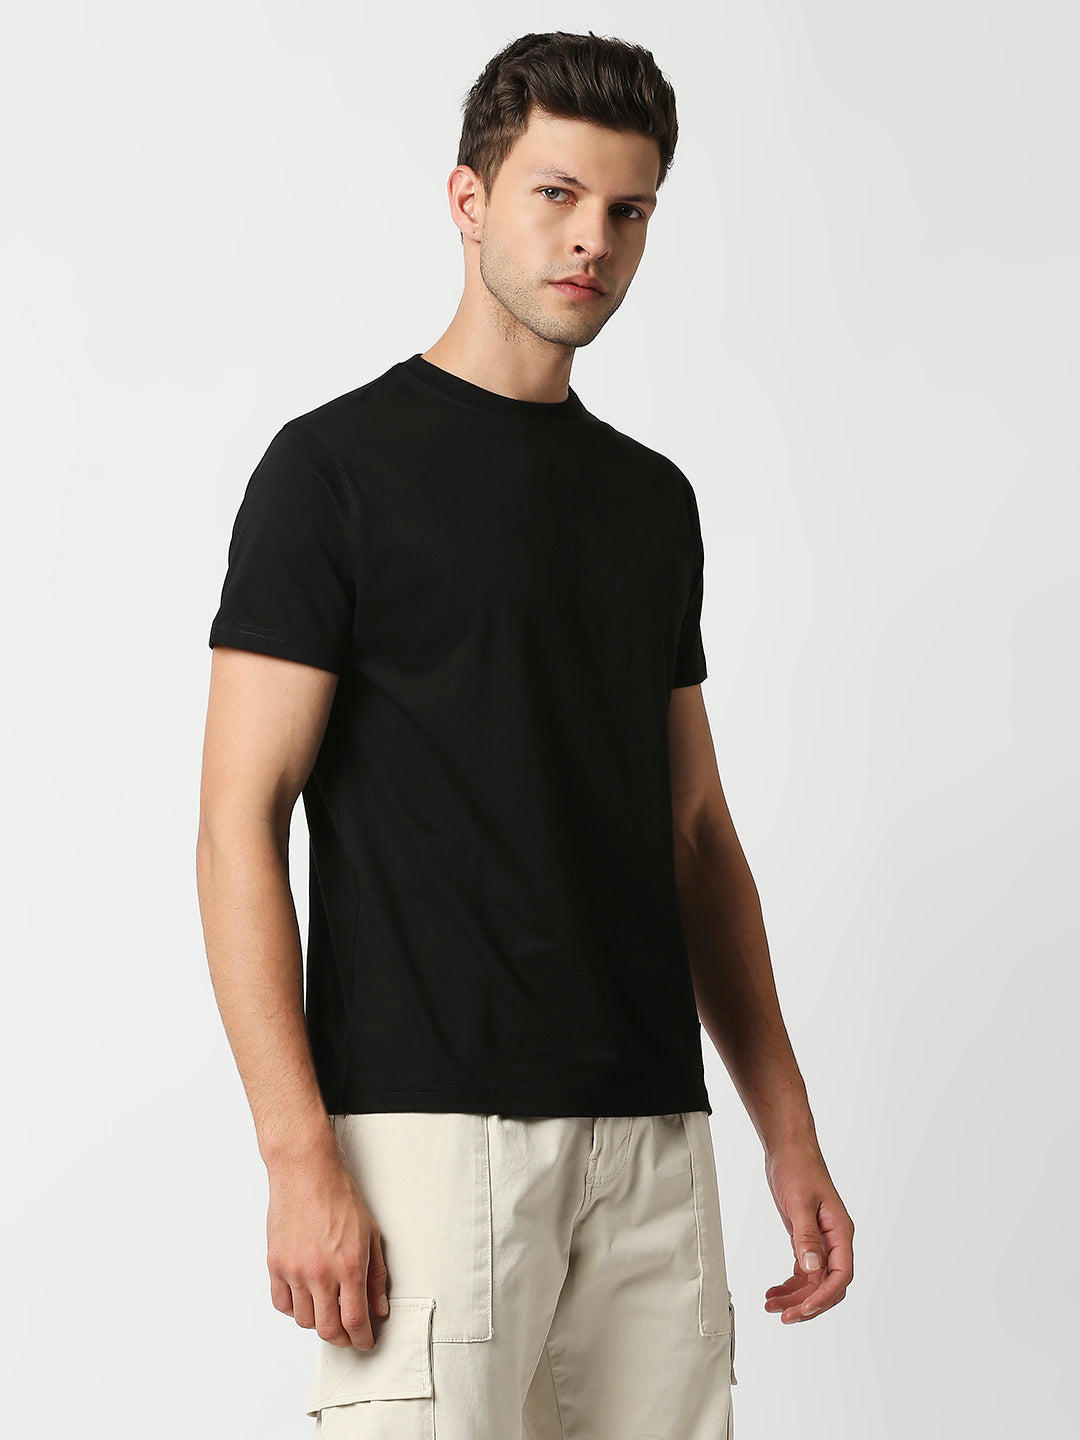 Buy Blamblack Men's Black Color Plain T Shirt